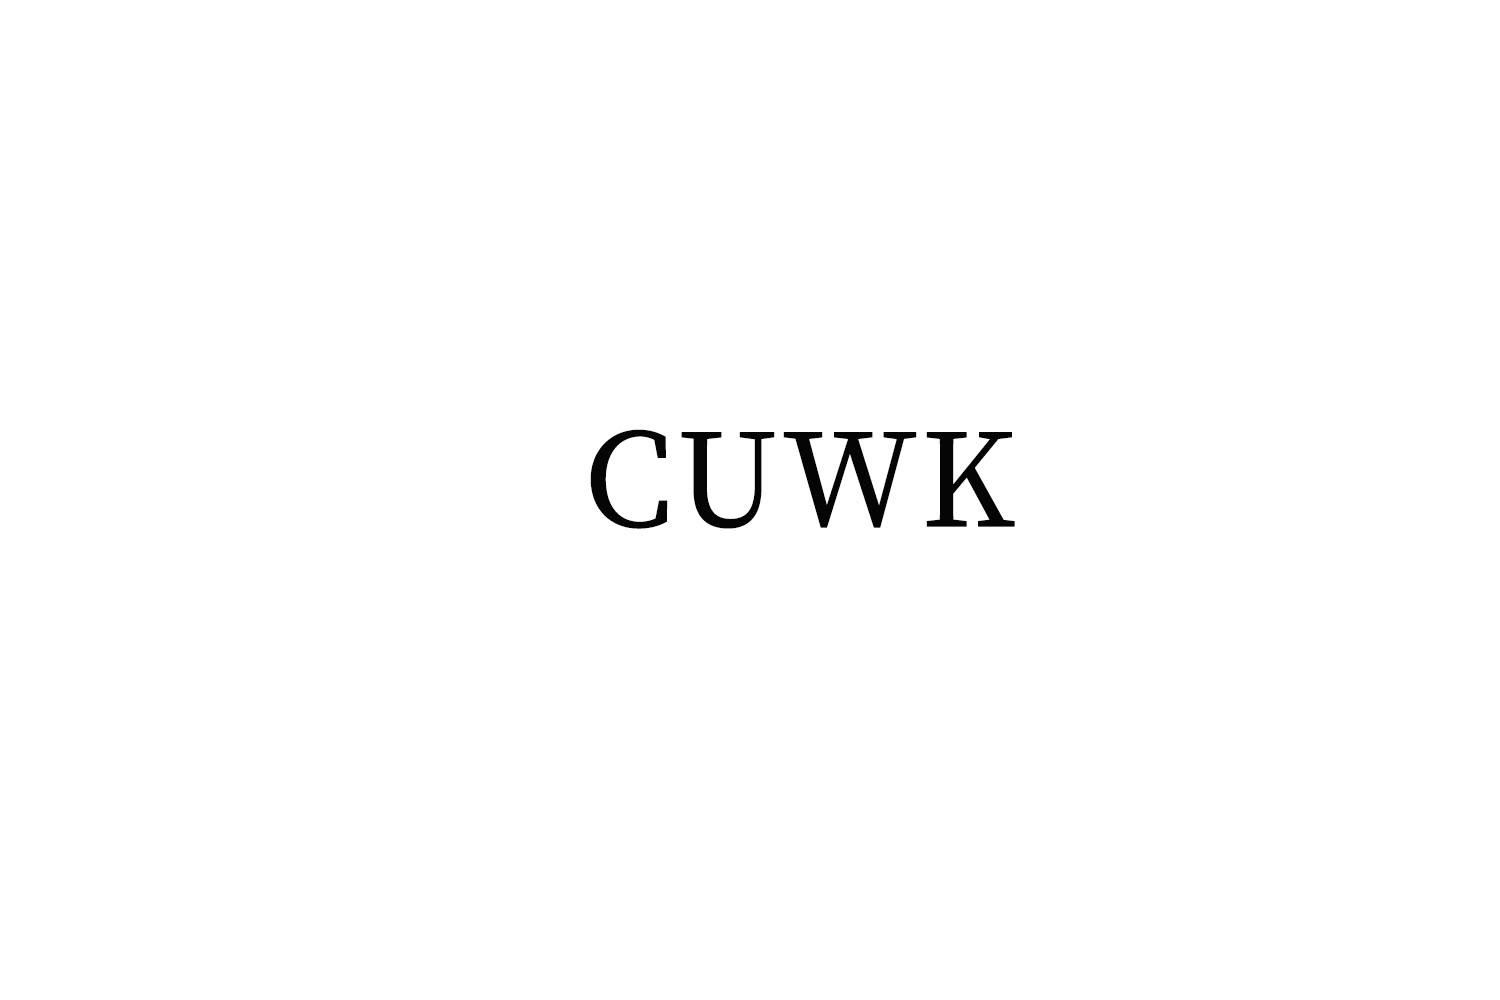 CUWK